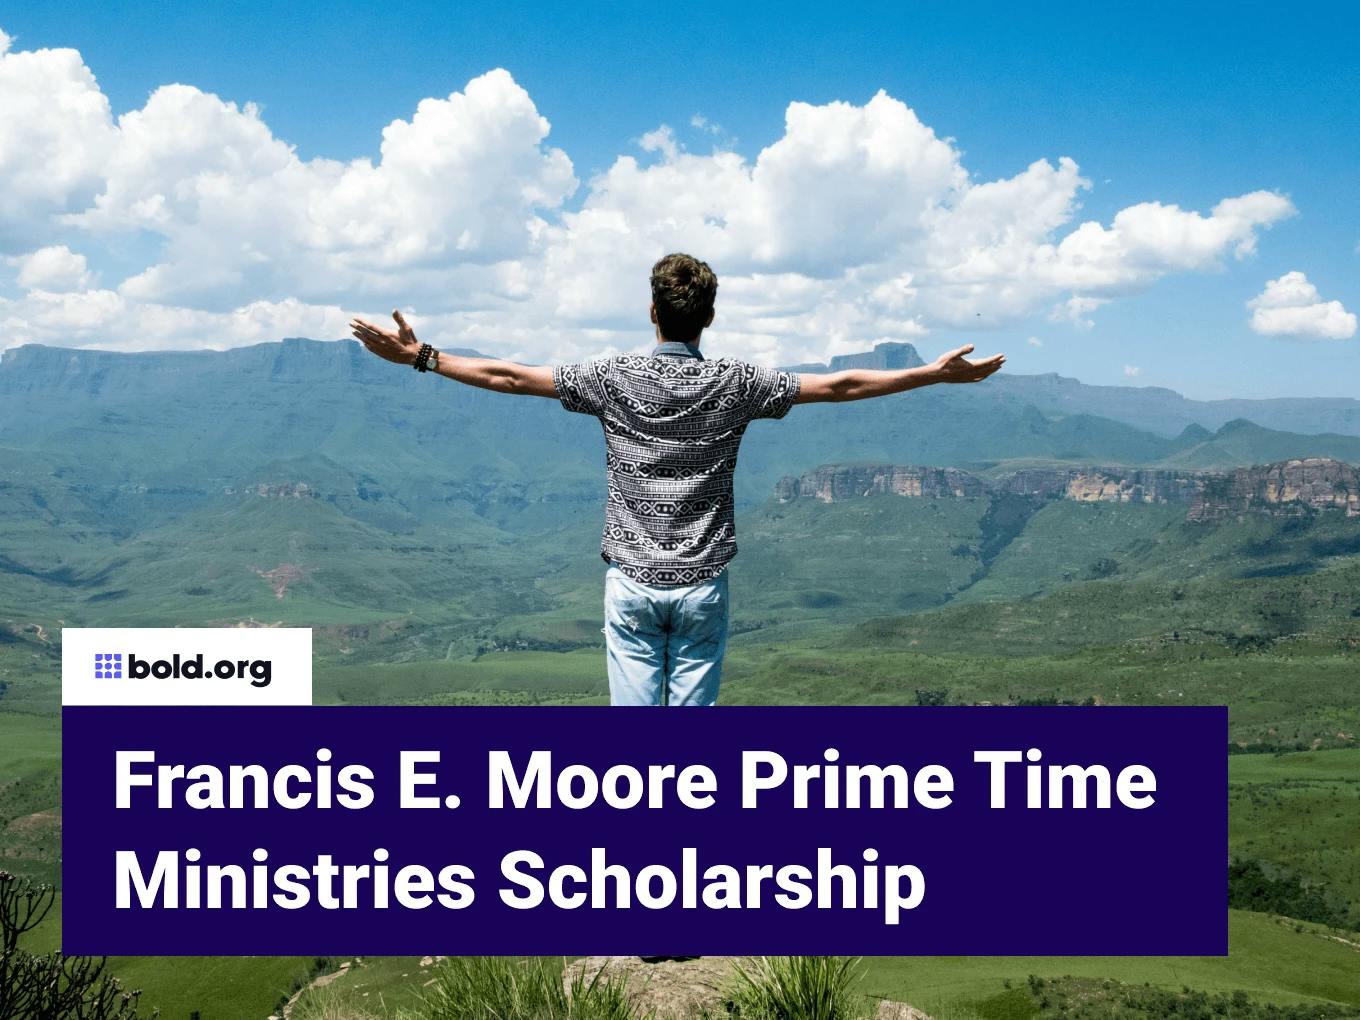 Francis E. Moore Prime Time Ministries Scholarship